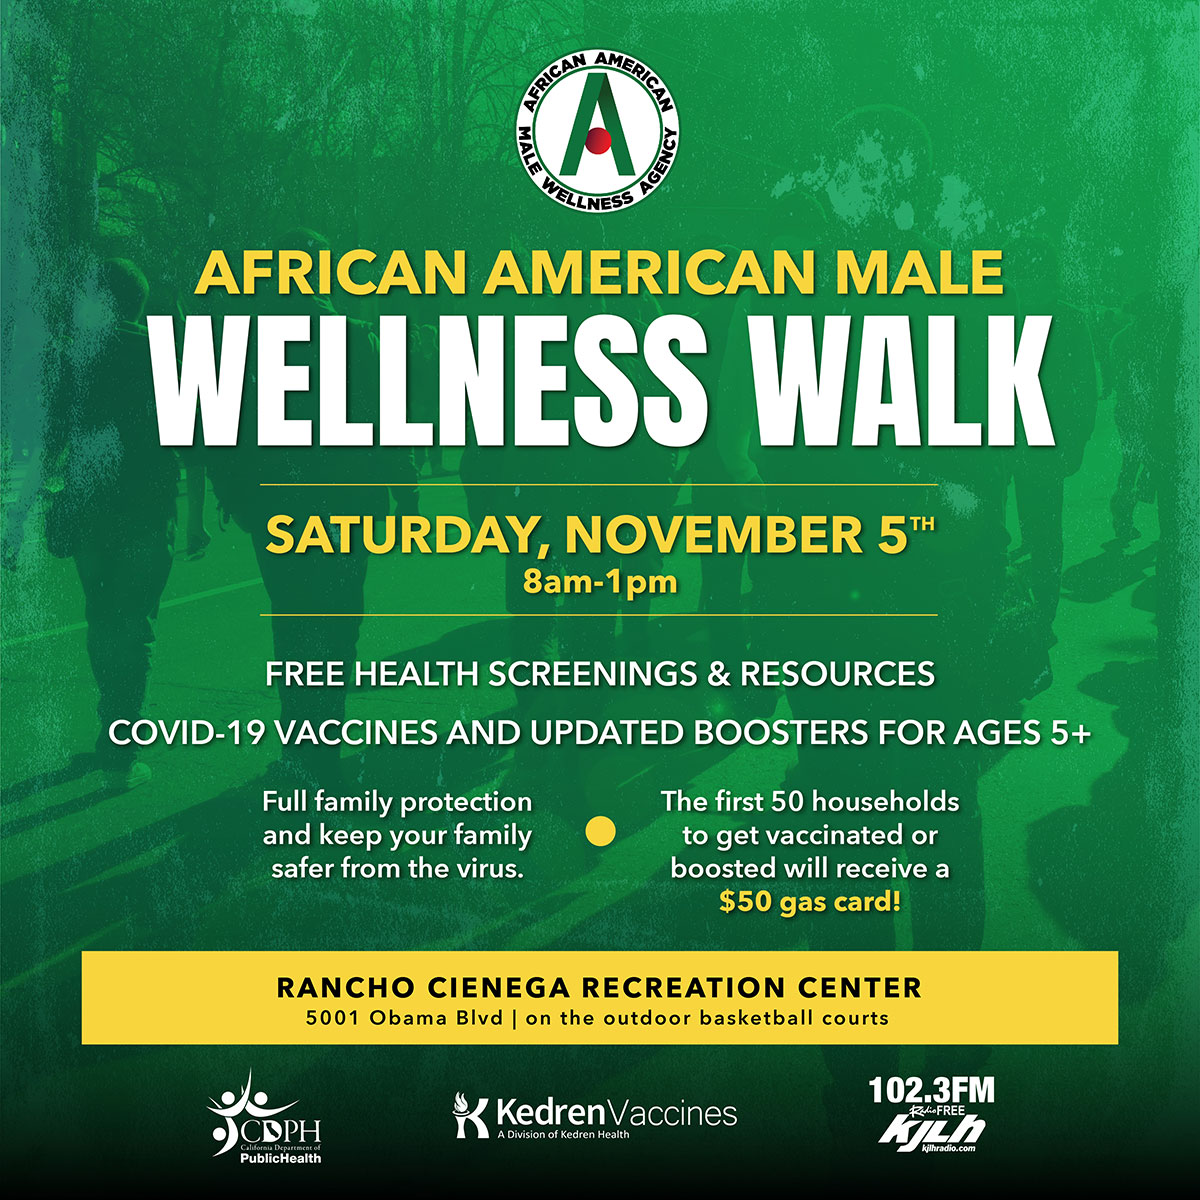 African American Male Wellness Walk/Fair